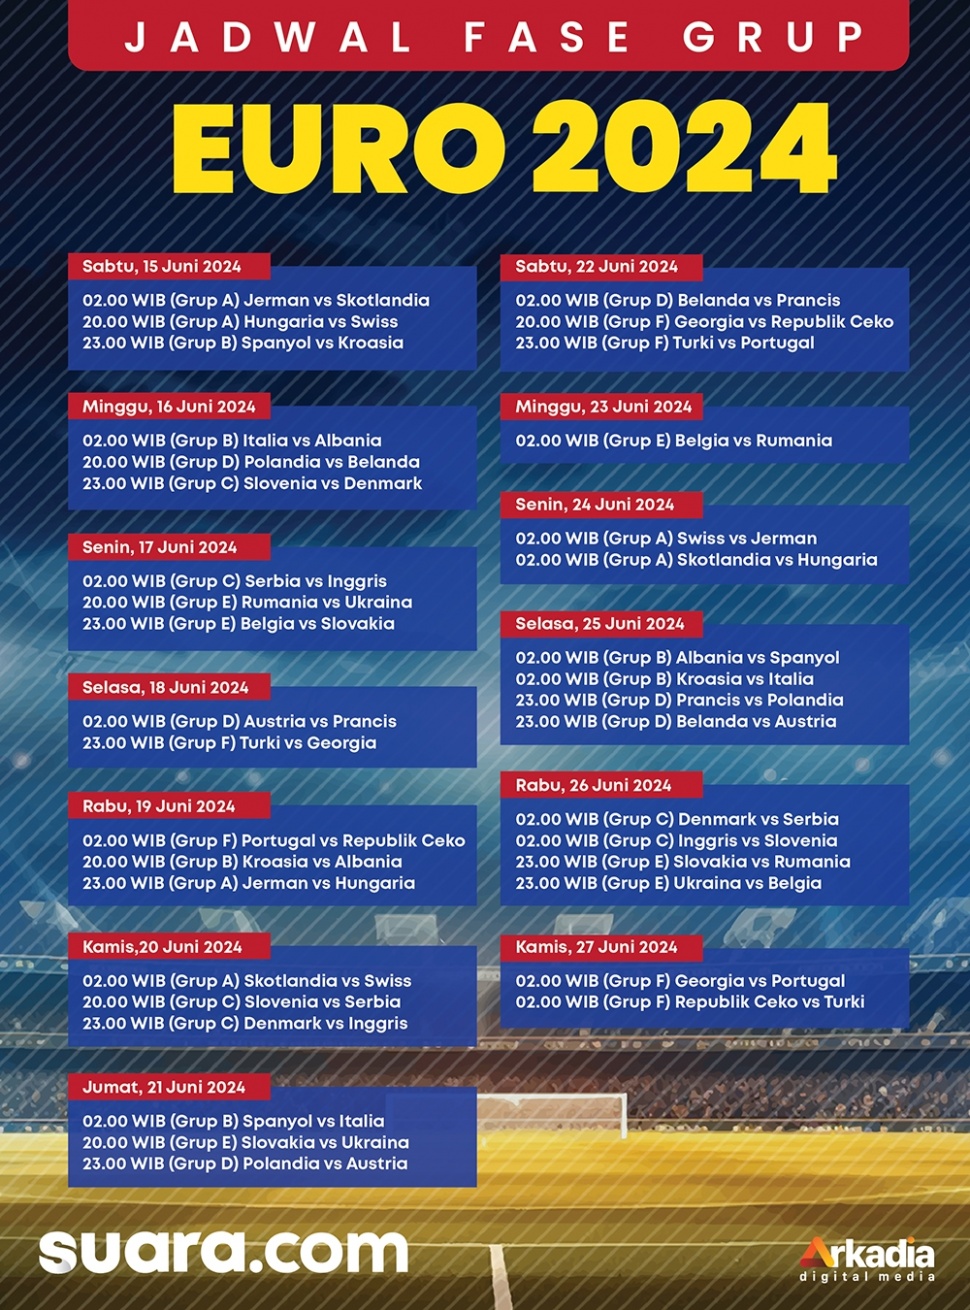 Jadwal lengkap Euro 2024. [Suara.com]